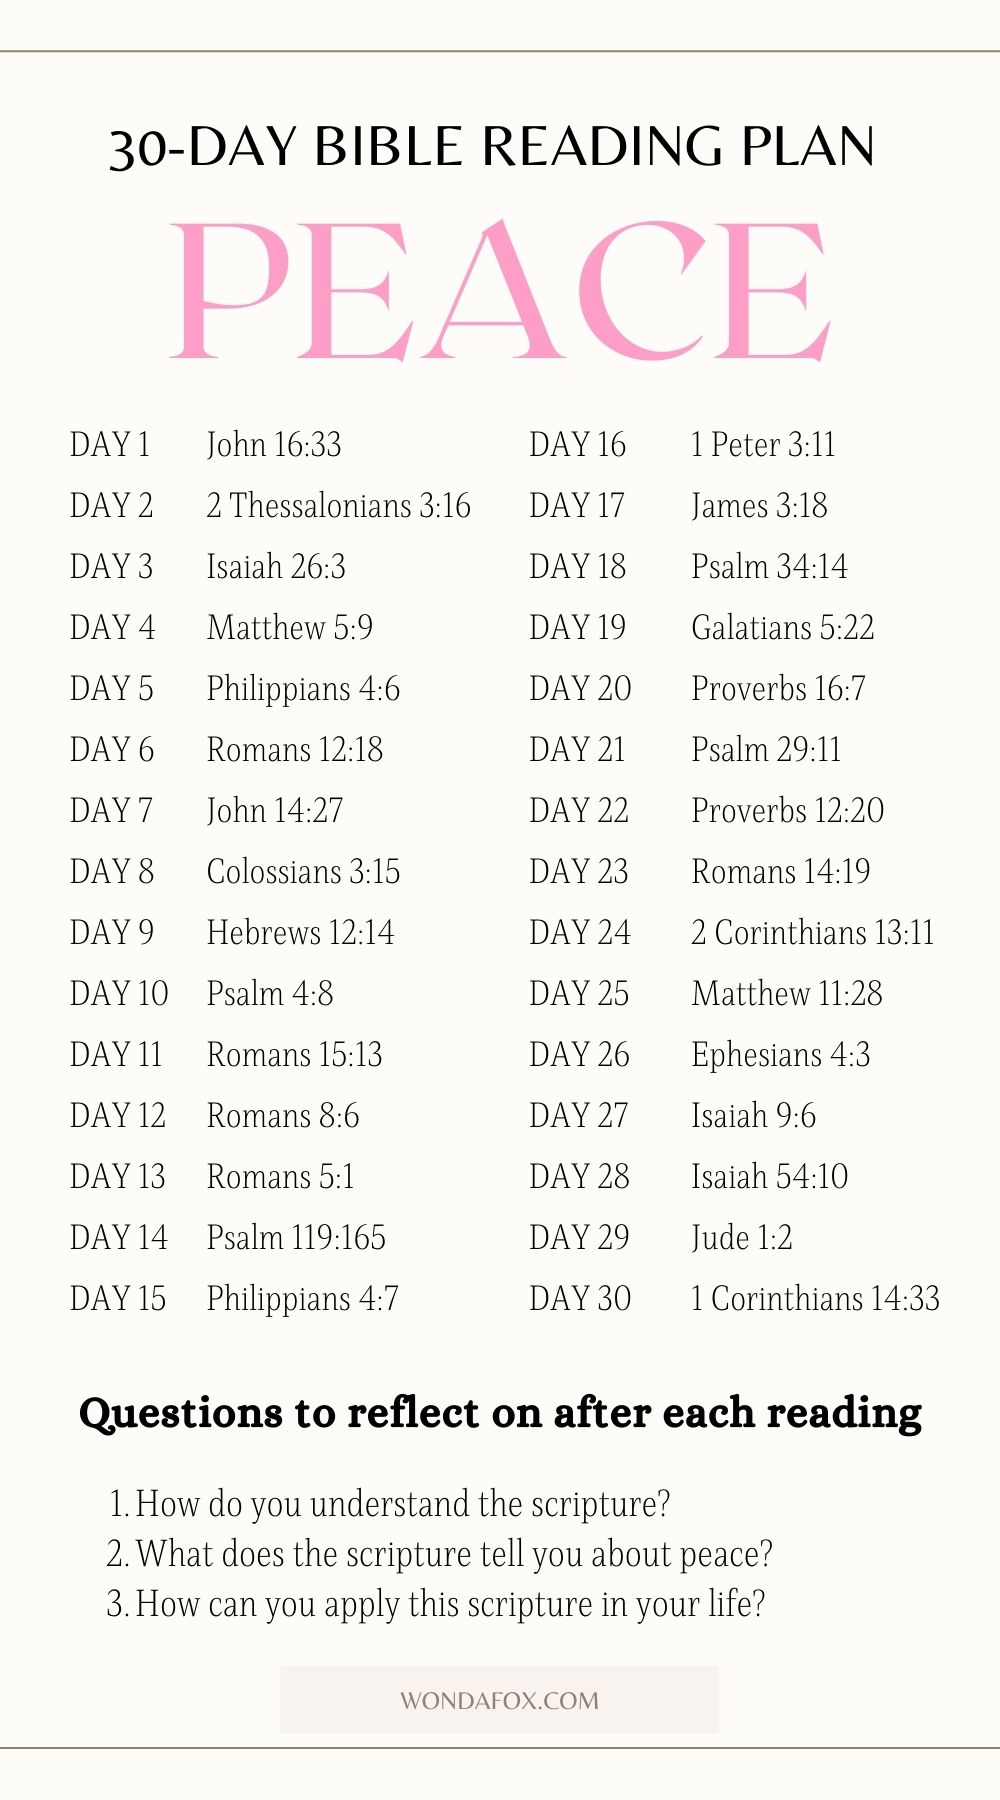 30-day peace bible reading plan